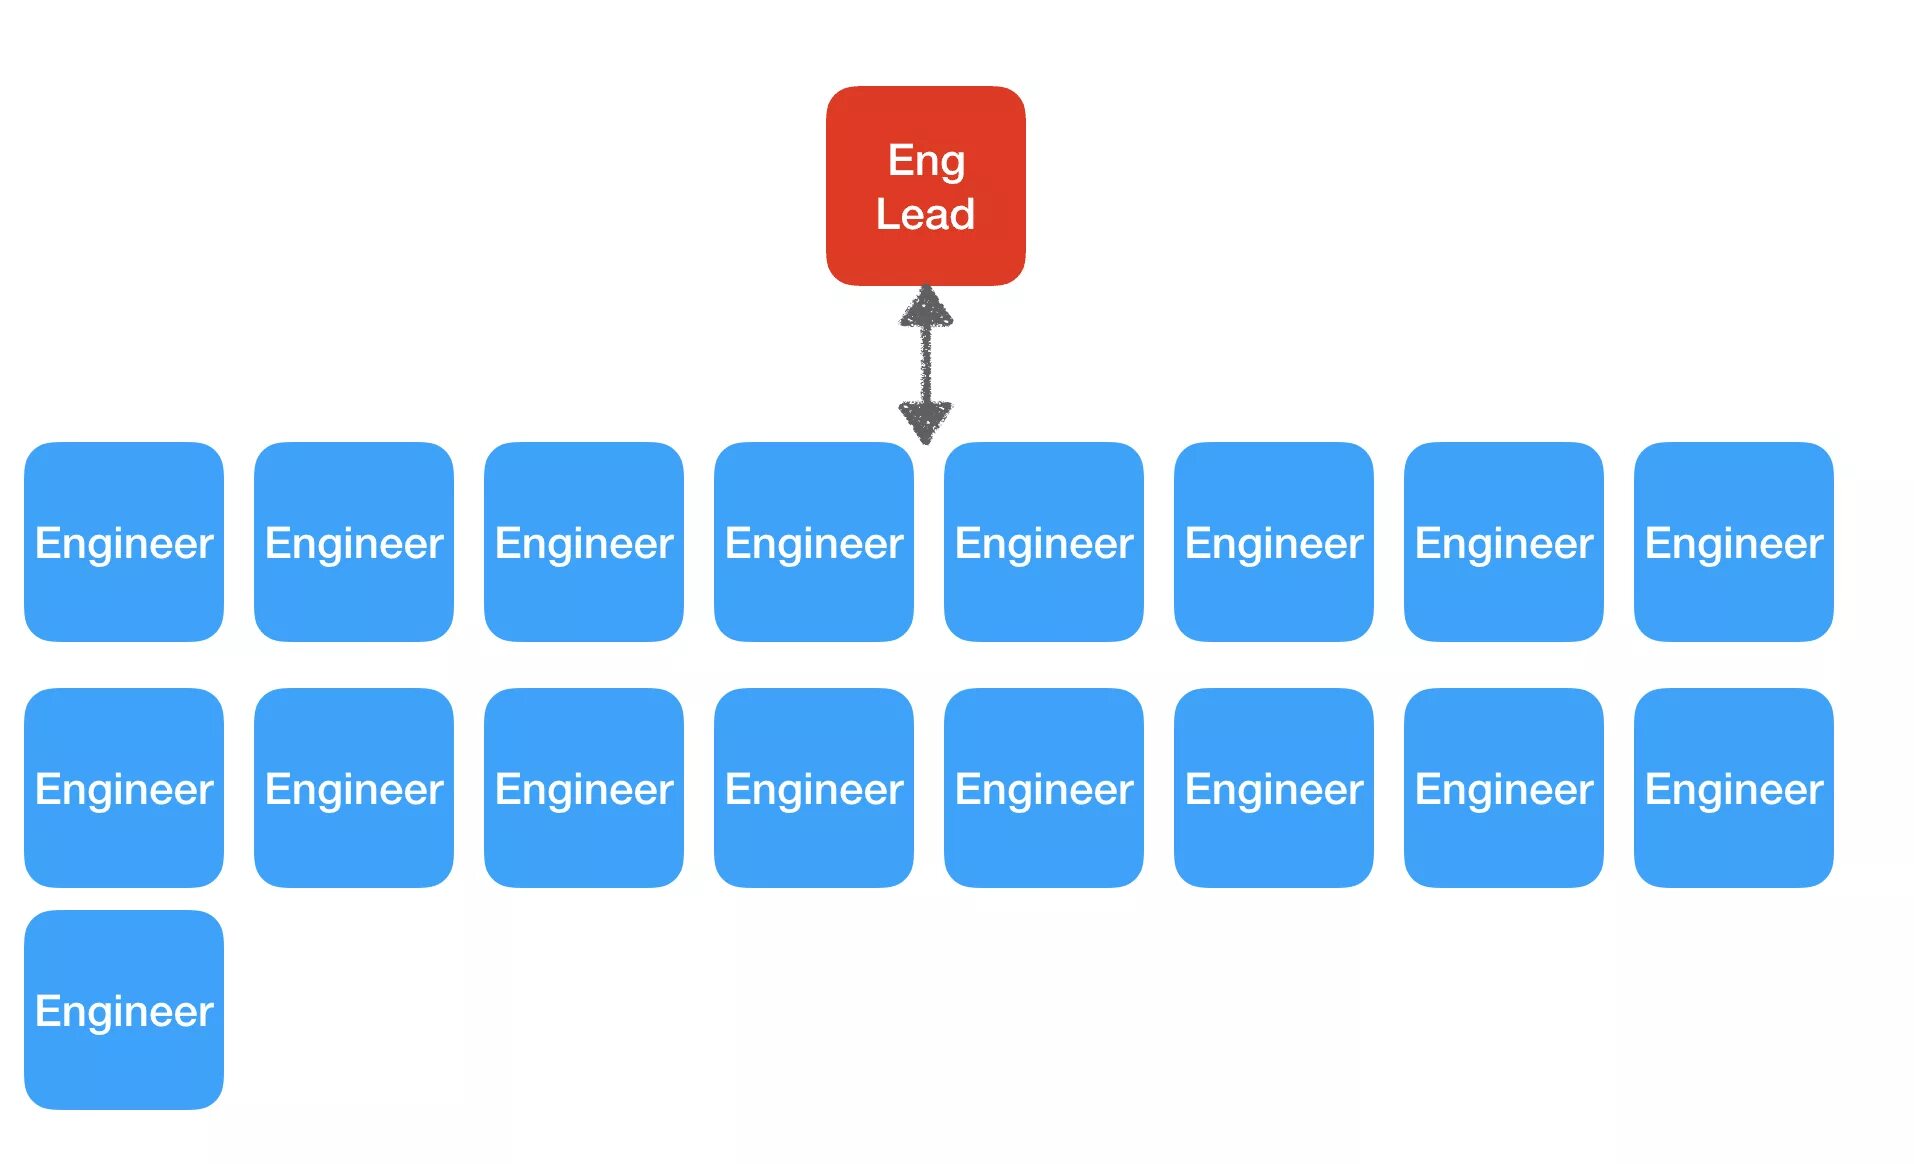 Lead Engineer. Lead Engineer i&c. Org Chart headcount.